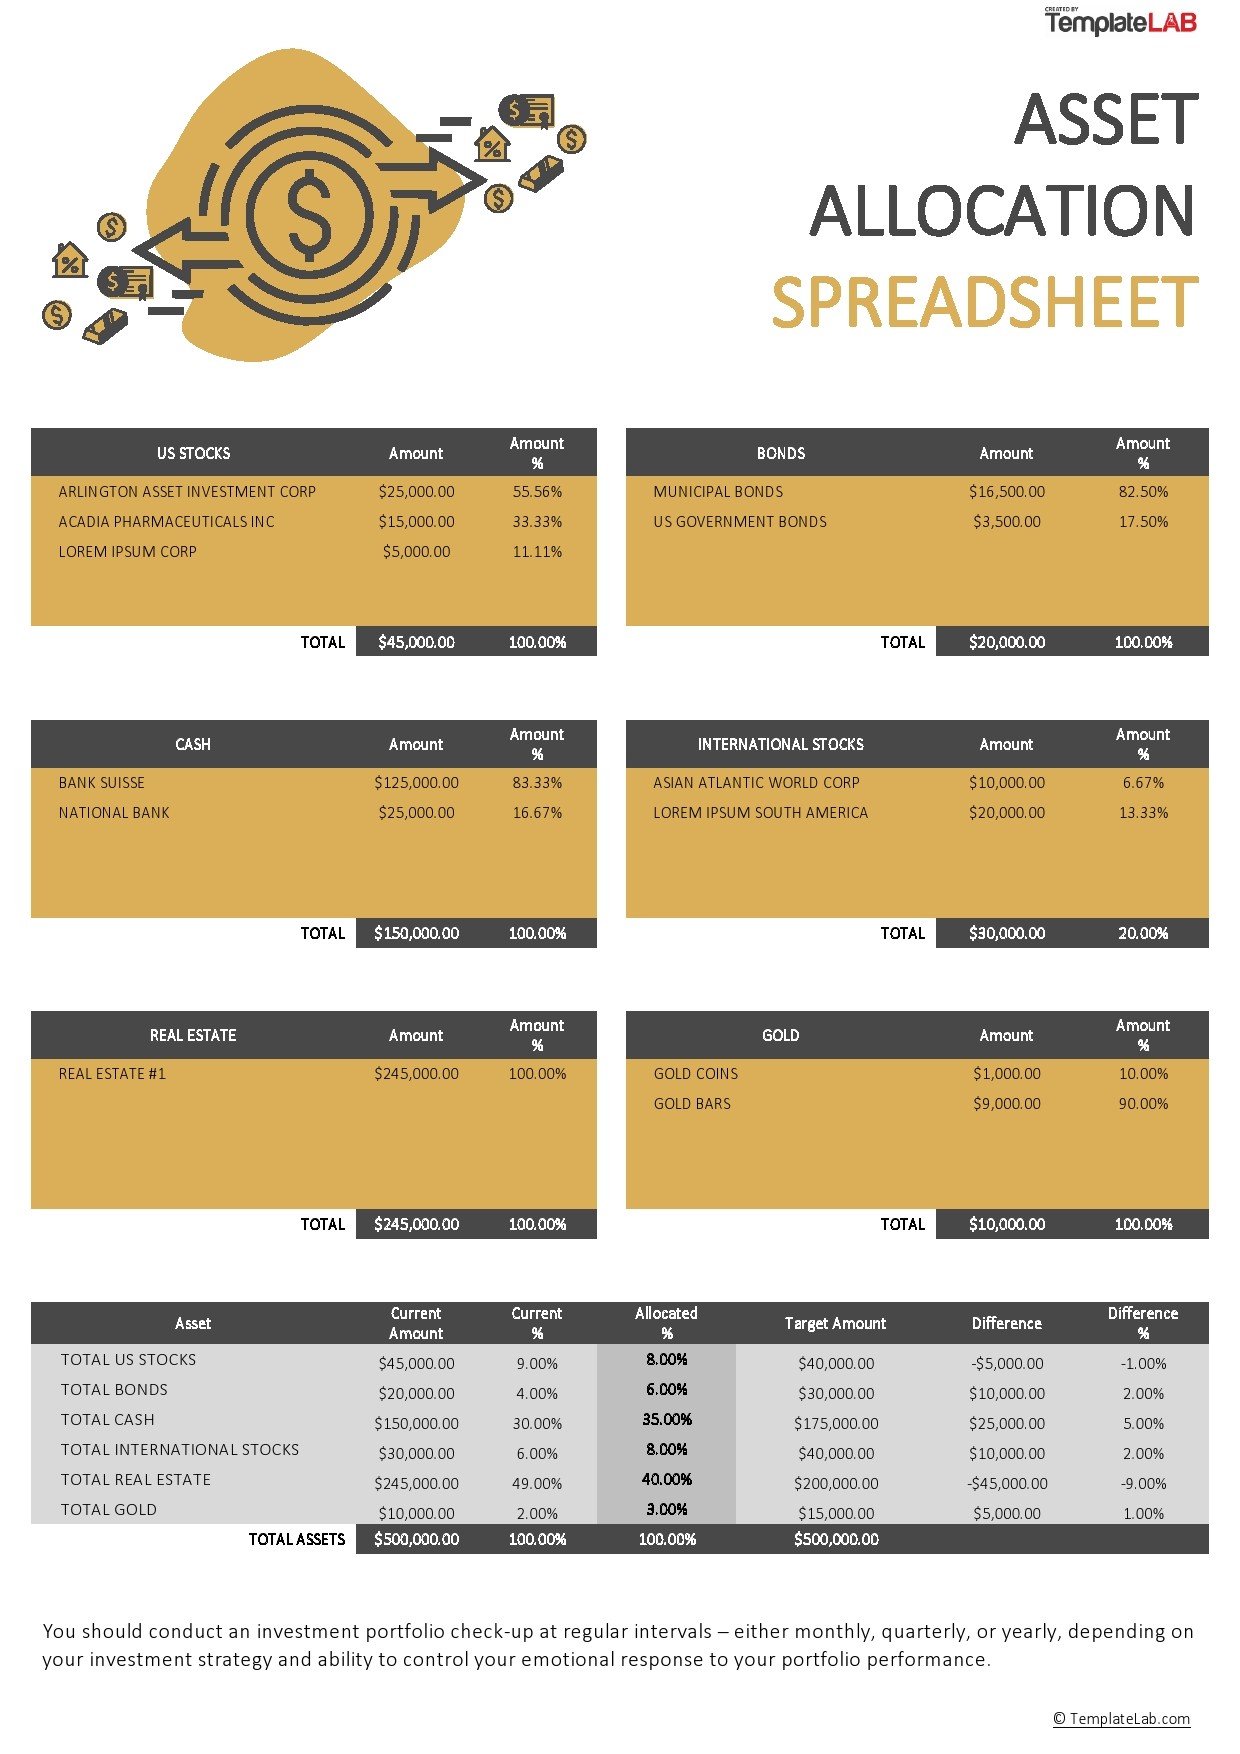 Free Asset Allocation Spreadsheet - TemplateLab.com